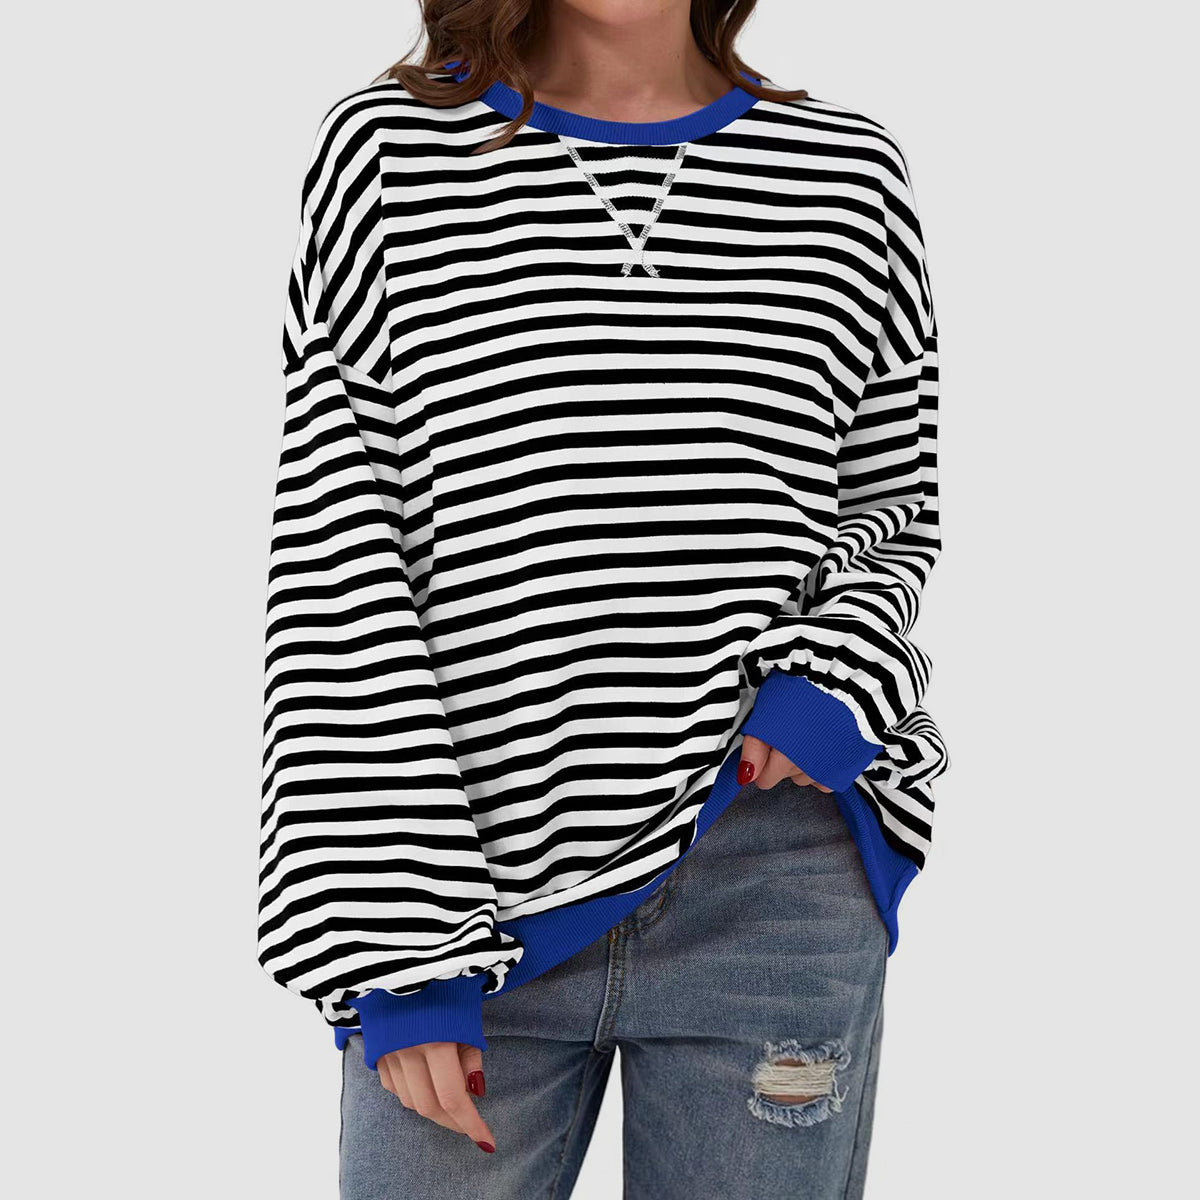 TEEK - Striped Round Neck Long Sleeve Shirt TOPS TEEK Trend Black/White S 